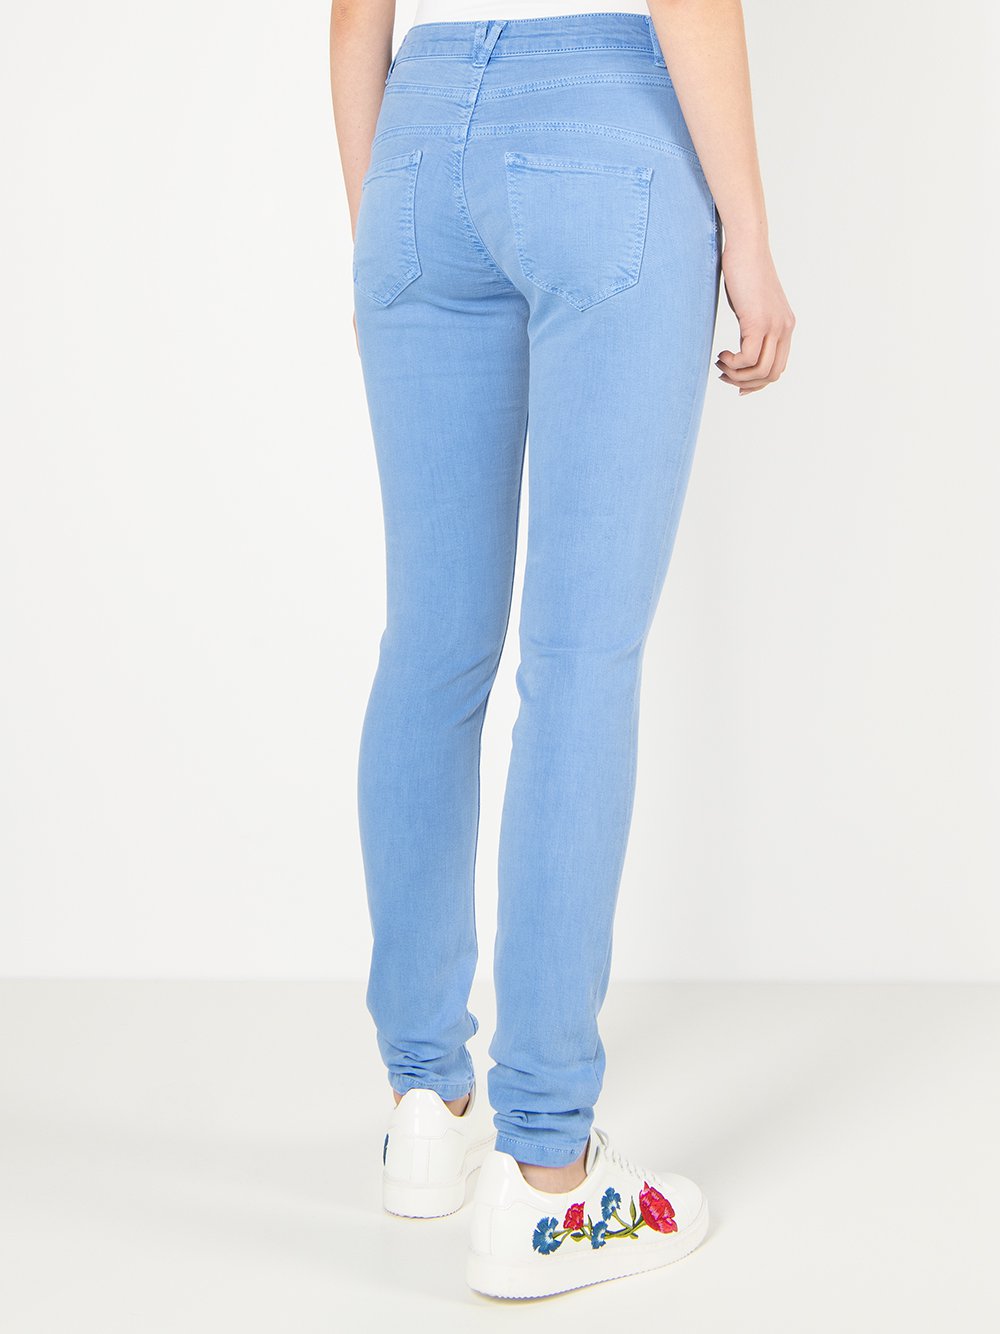 Women's jeans SoyaConcept |